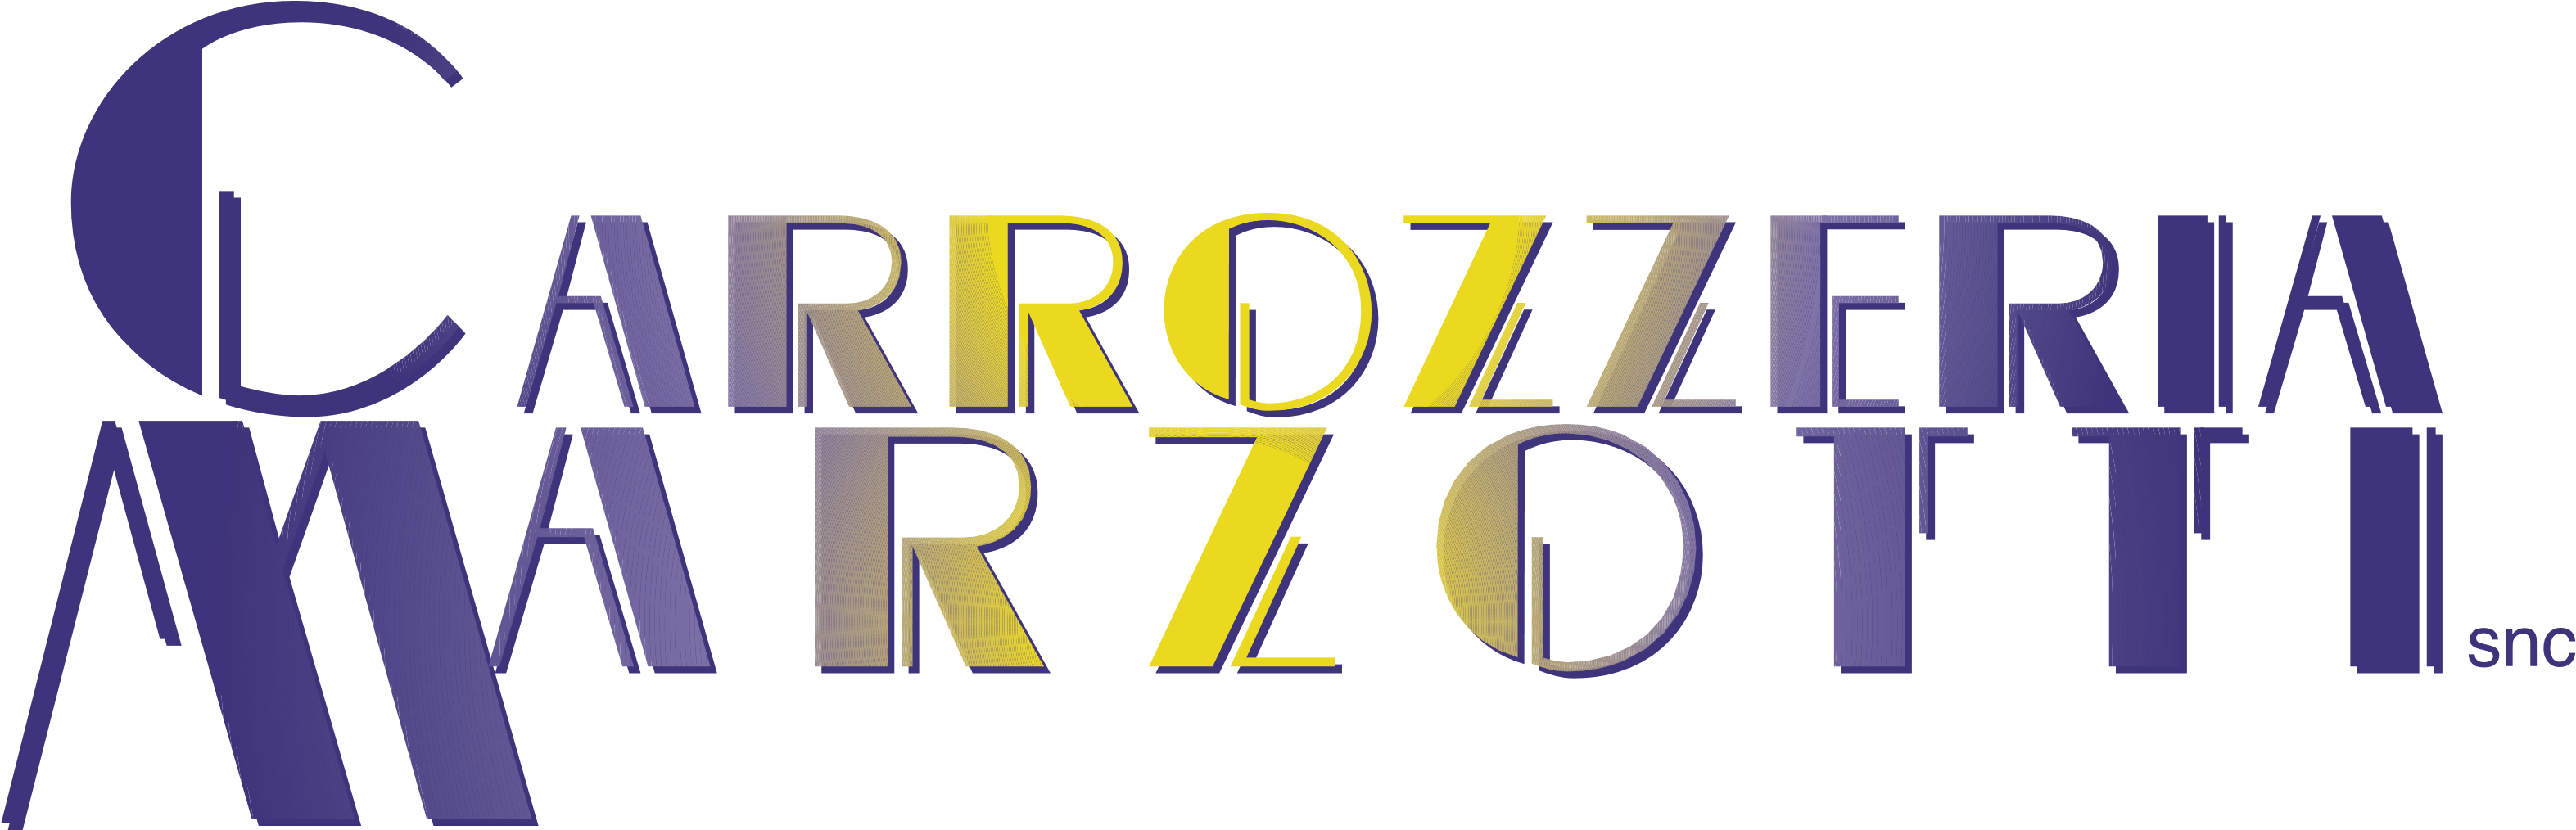 CARROZZERIA MARZOTTI S.N.C.